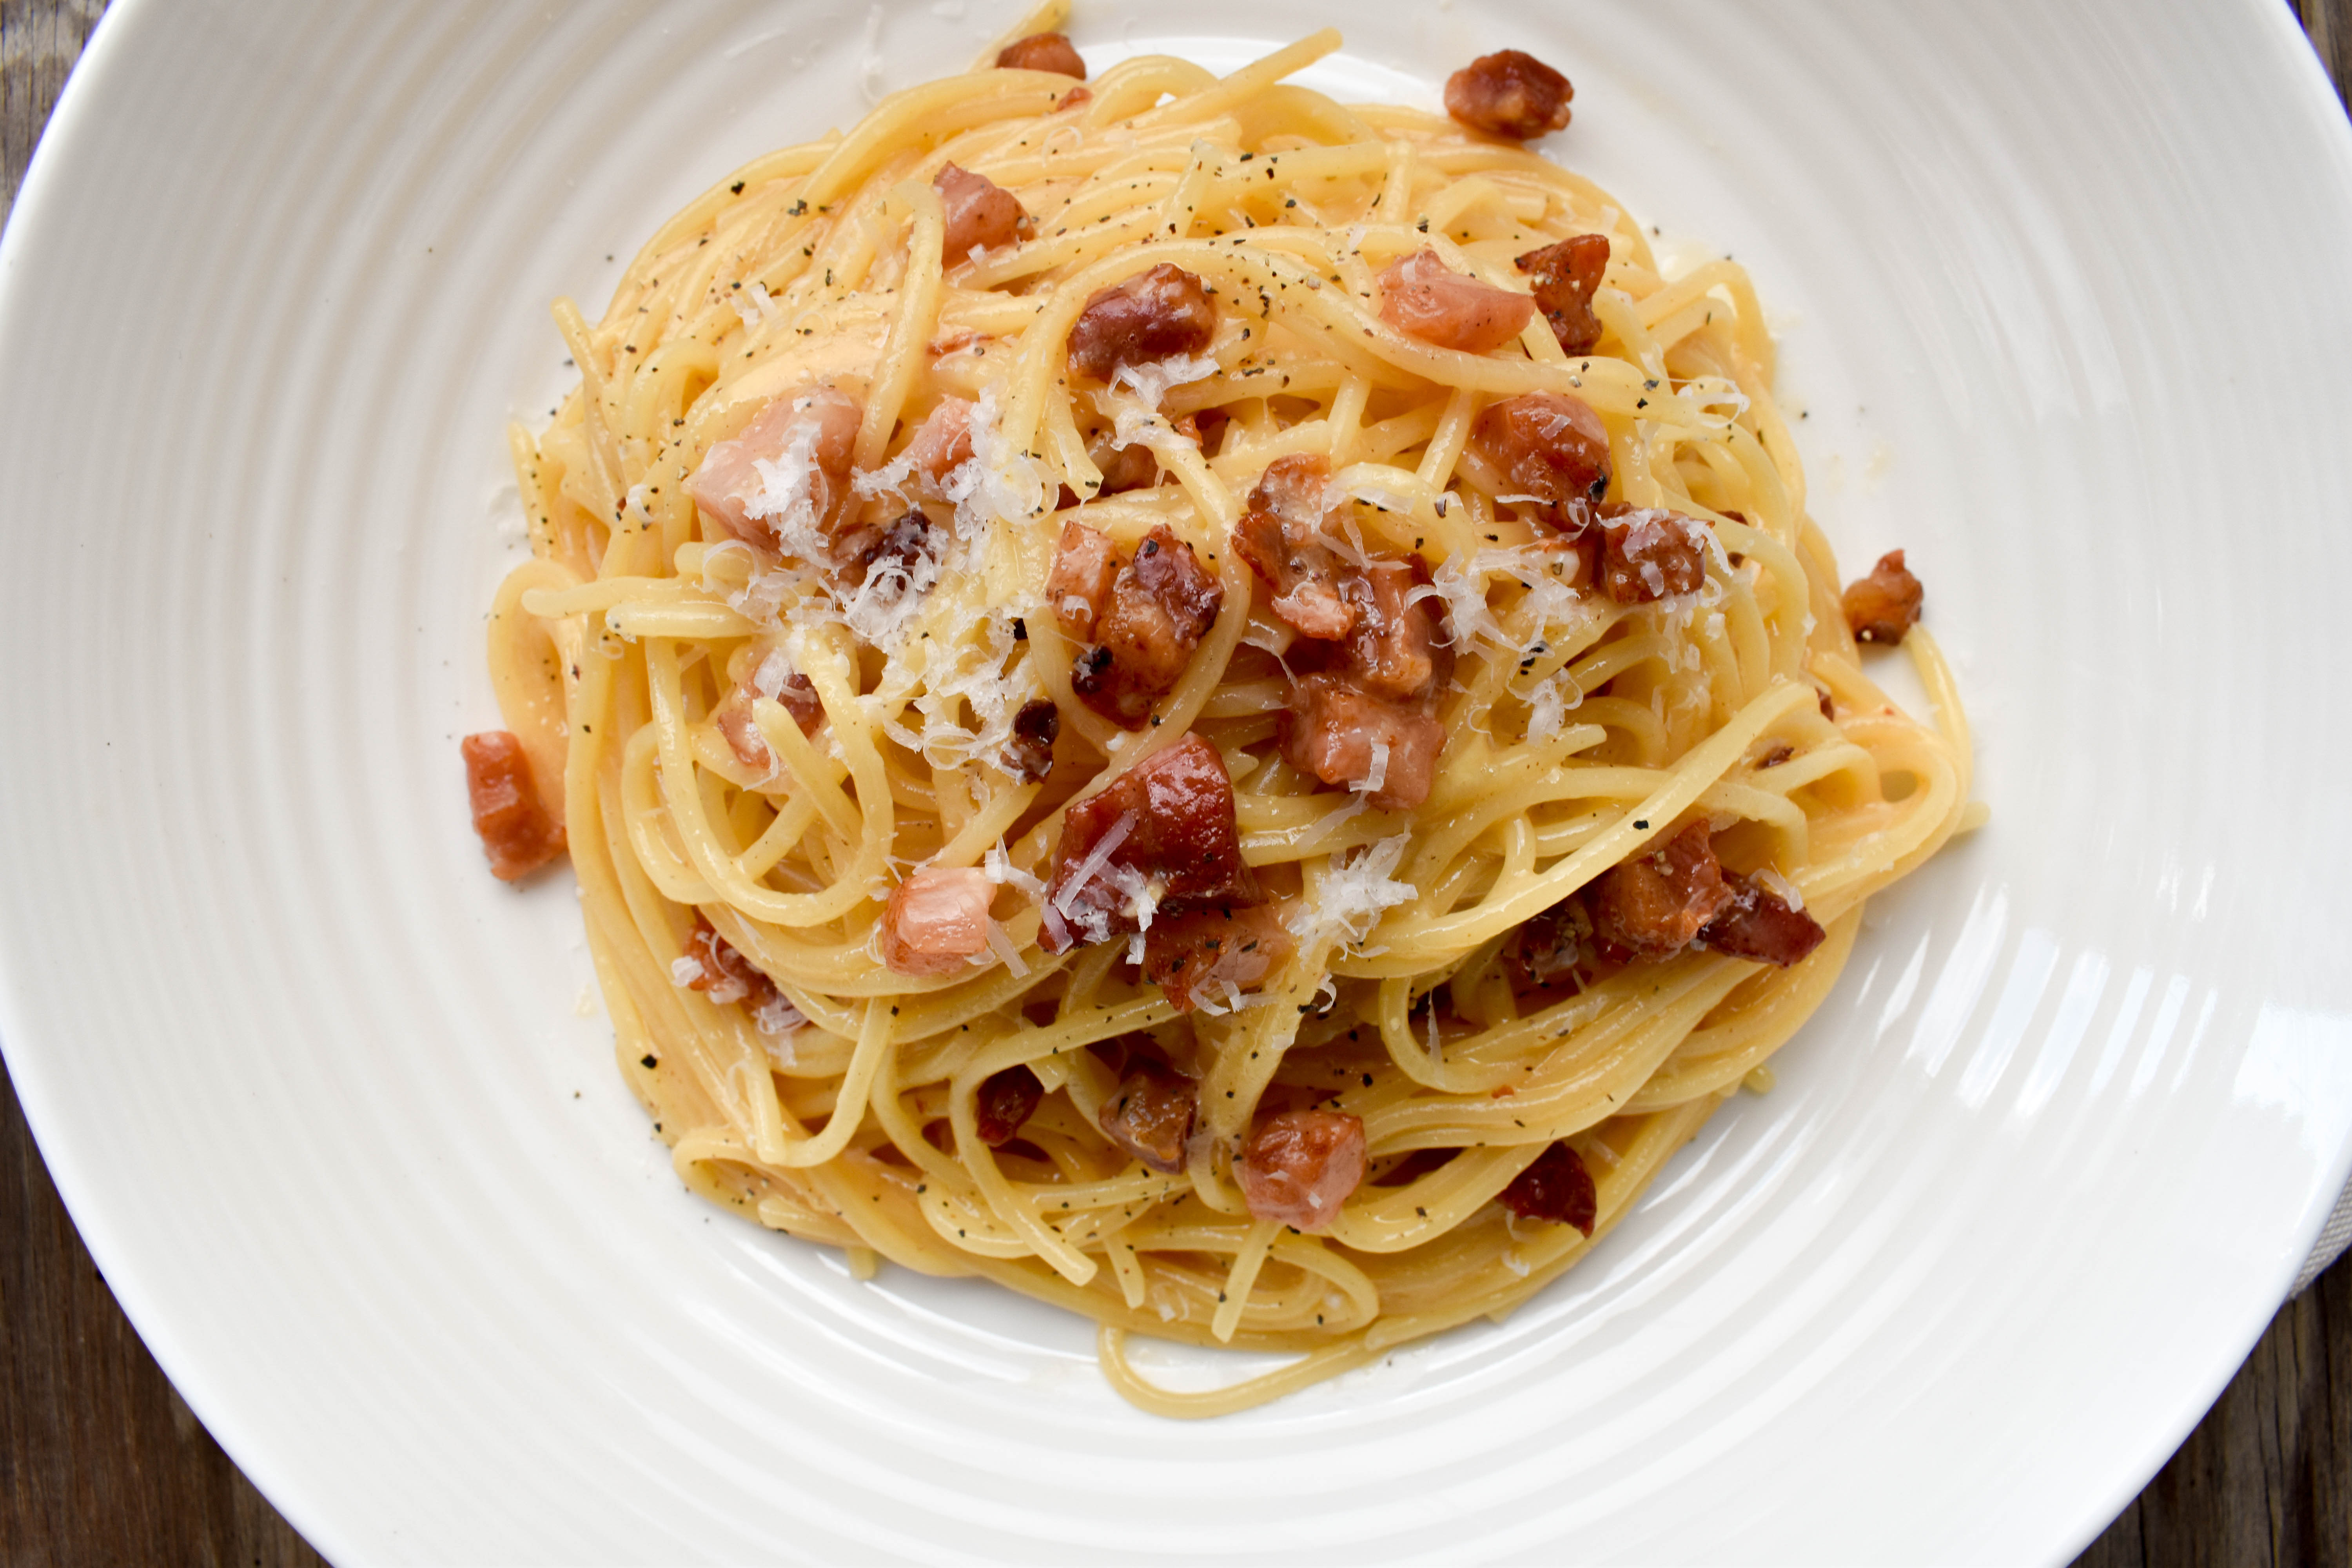 How to make the Real Spaghetti alla Carbonara